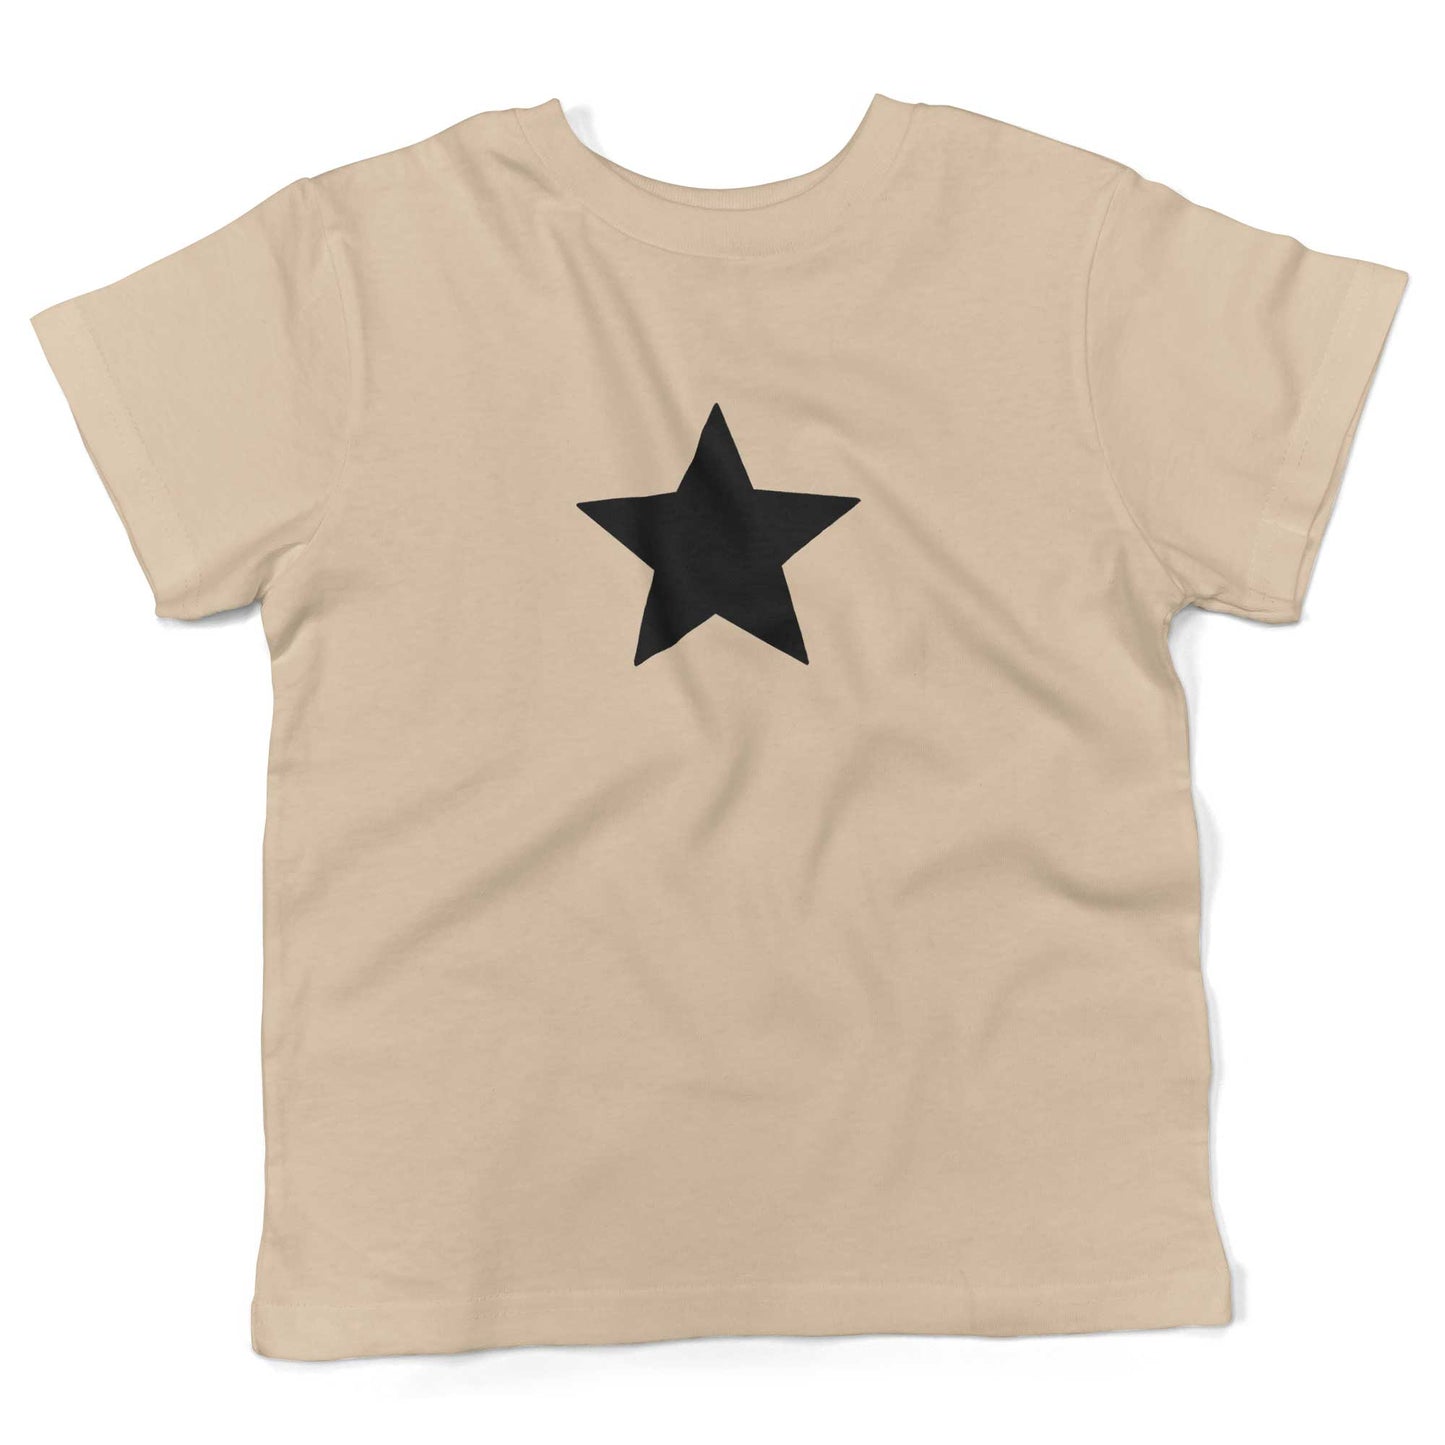 Five-Point Star Toddler Shirt-Organic Natural-Black Star